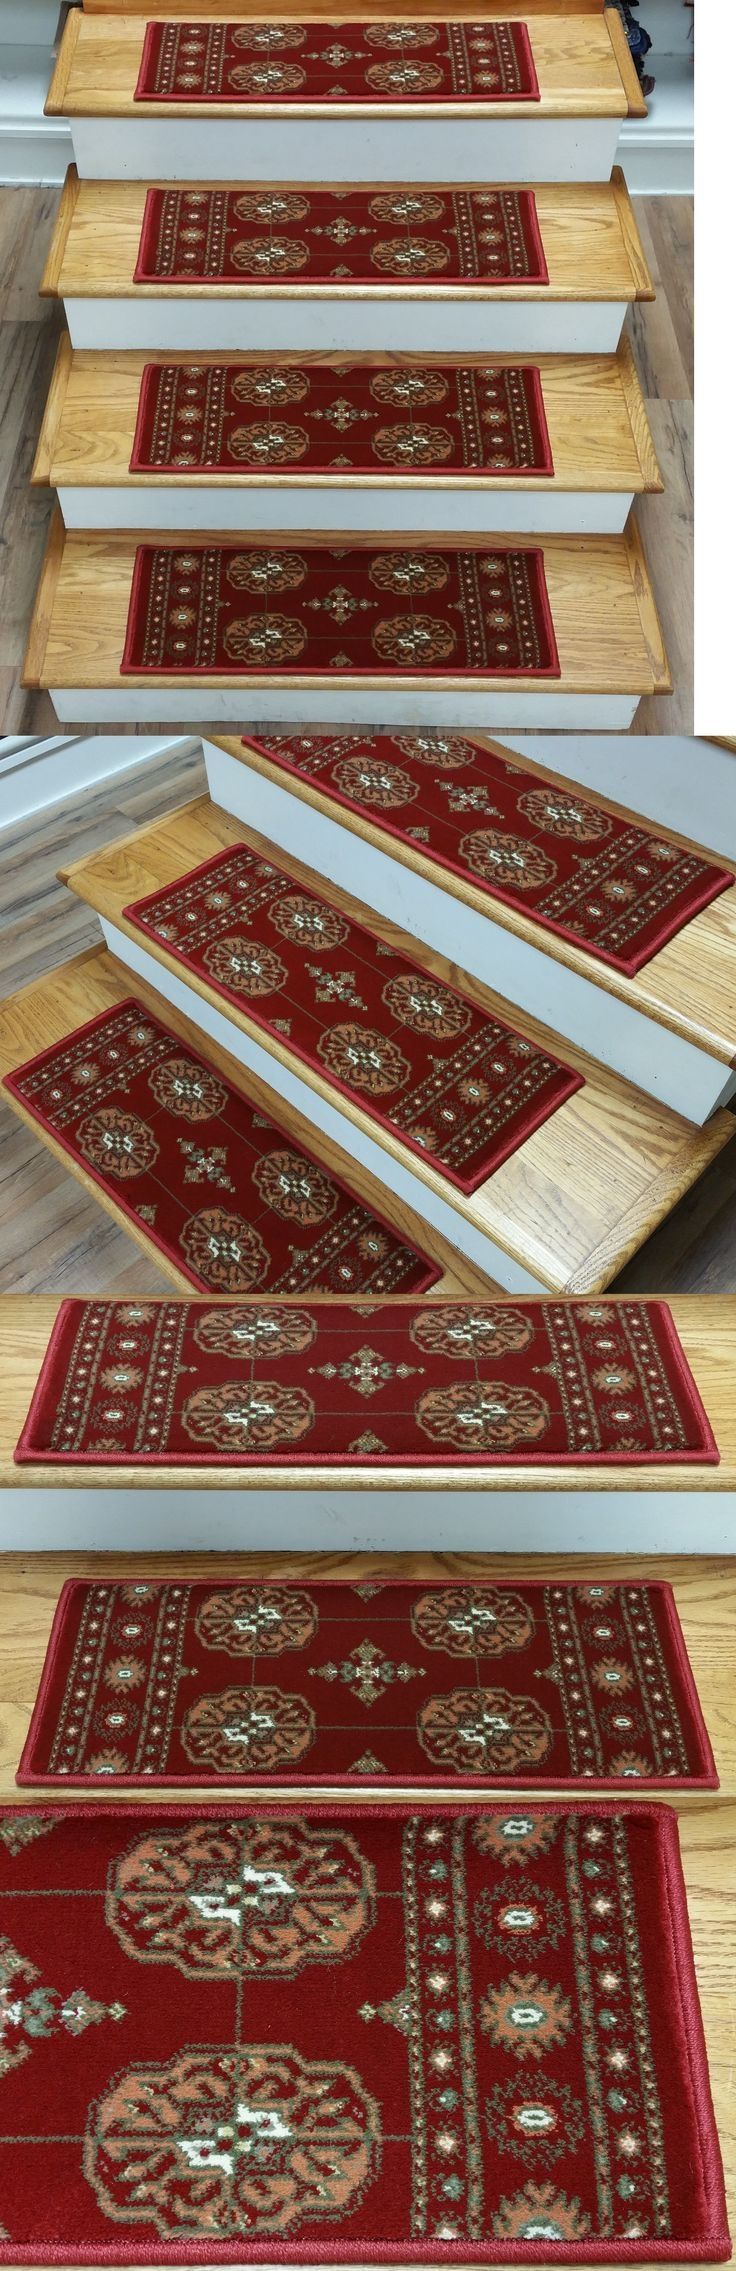 Best 20 Stair Tread Rugs Ideas On Pinterest Carpet Stair Treads Intended For Oval Stair Tread Rugs (Photo 20 of 20)